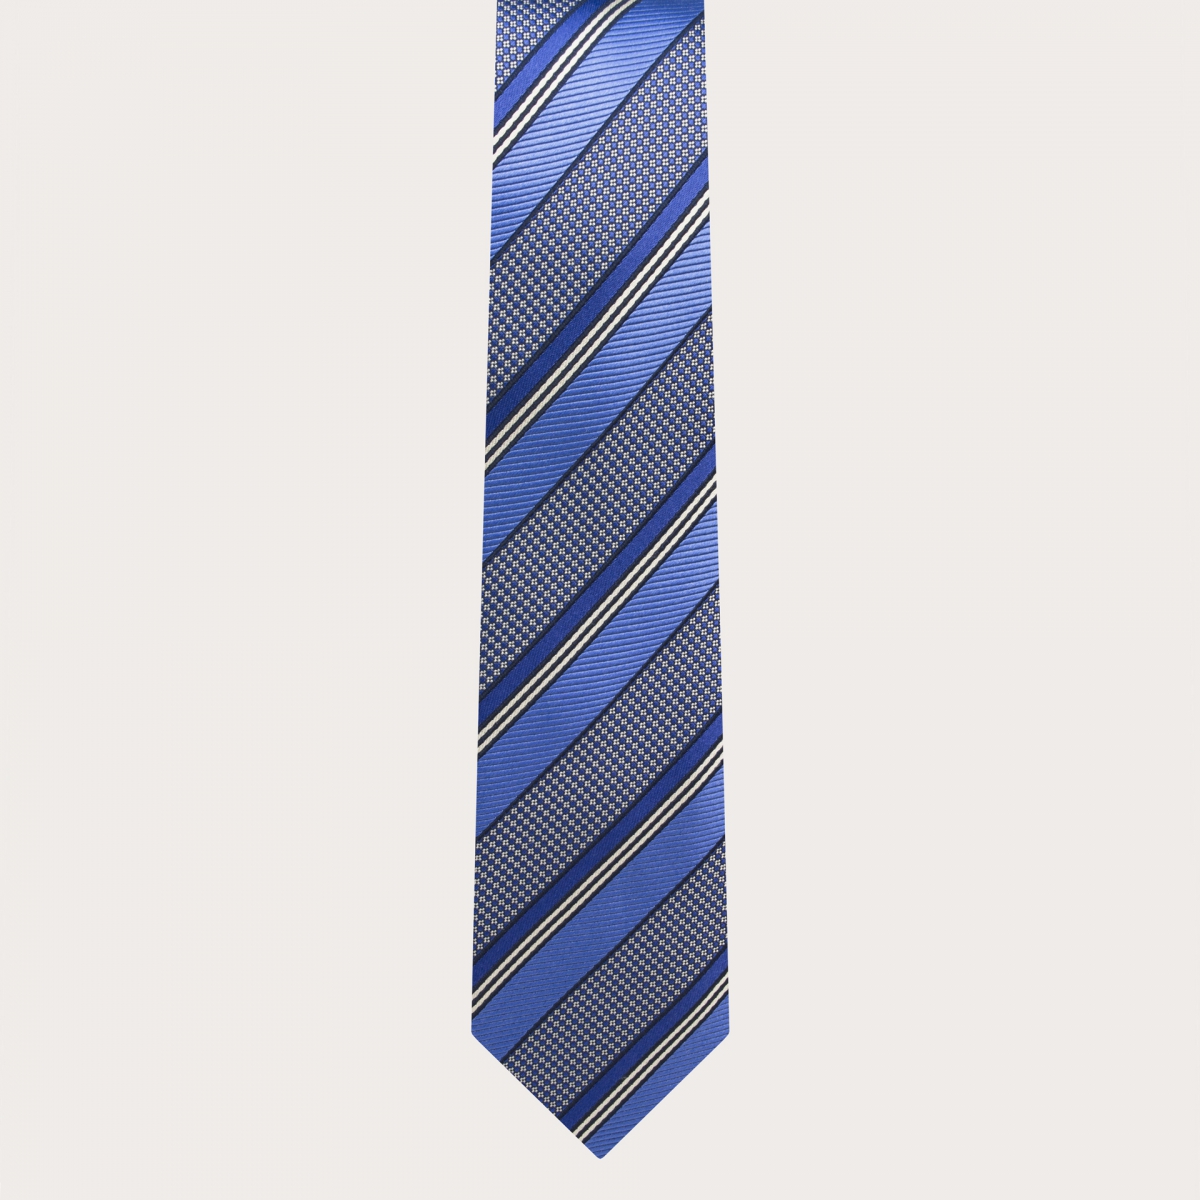 Cravatta cerimonia sottile in seta jacquard con motivo regimental blu